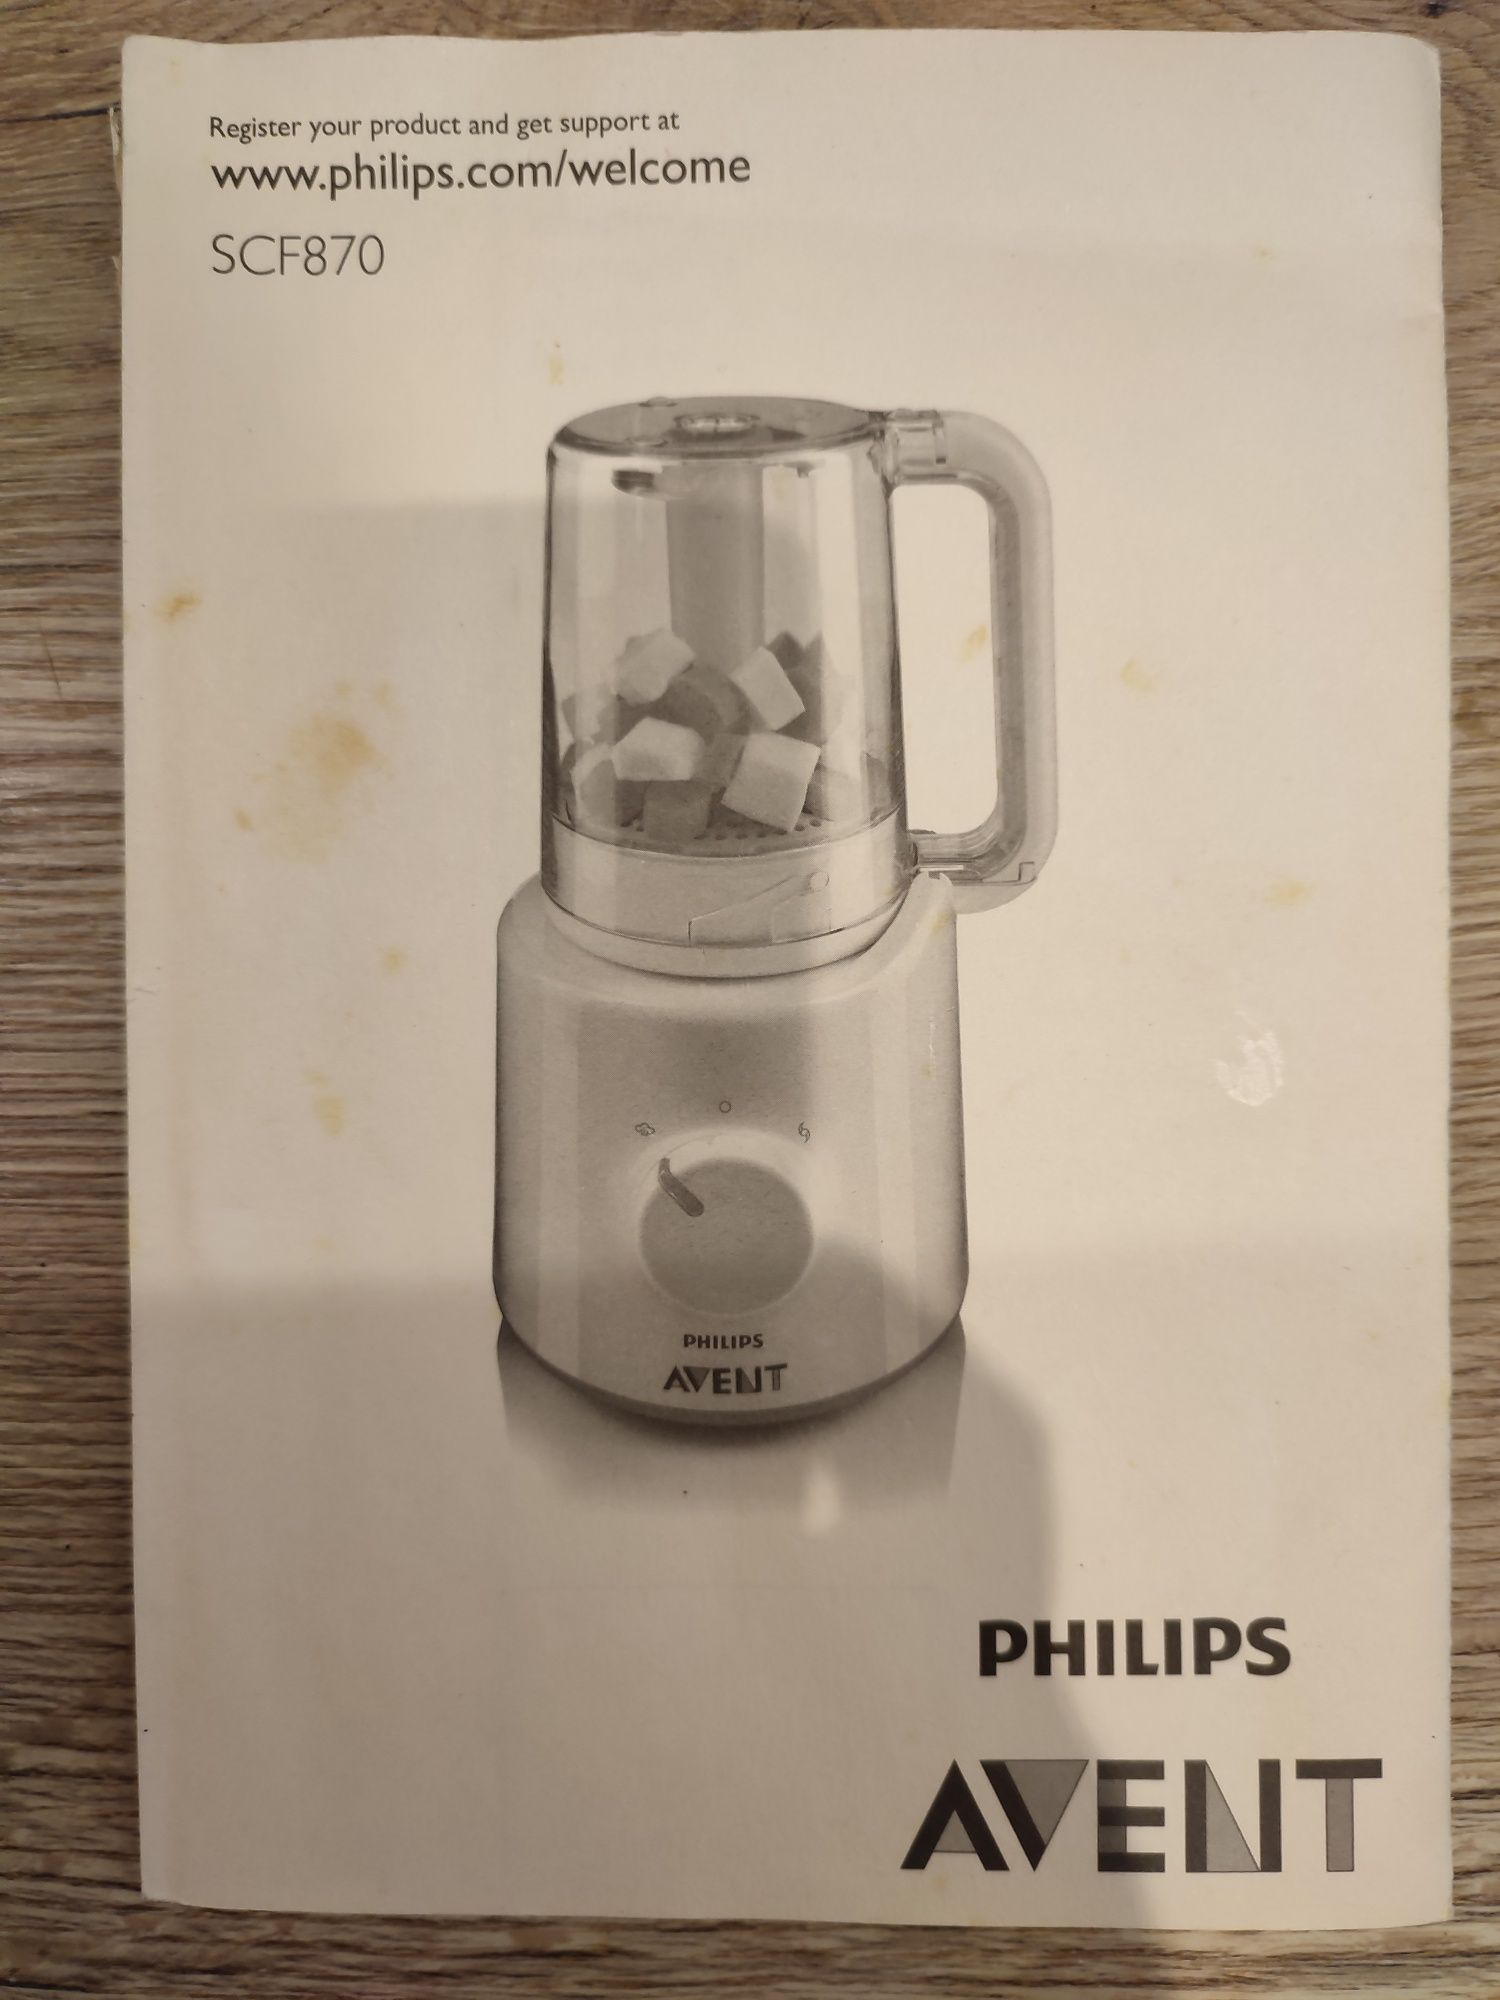 Philips Avent blender parowar dla dzieci